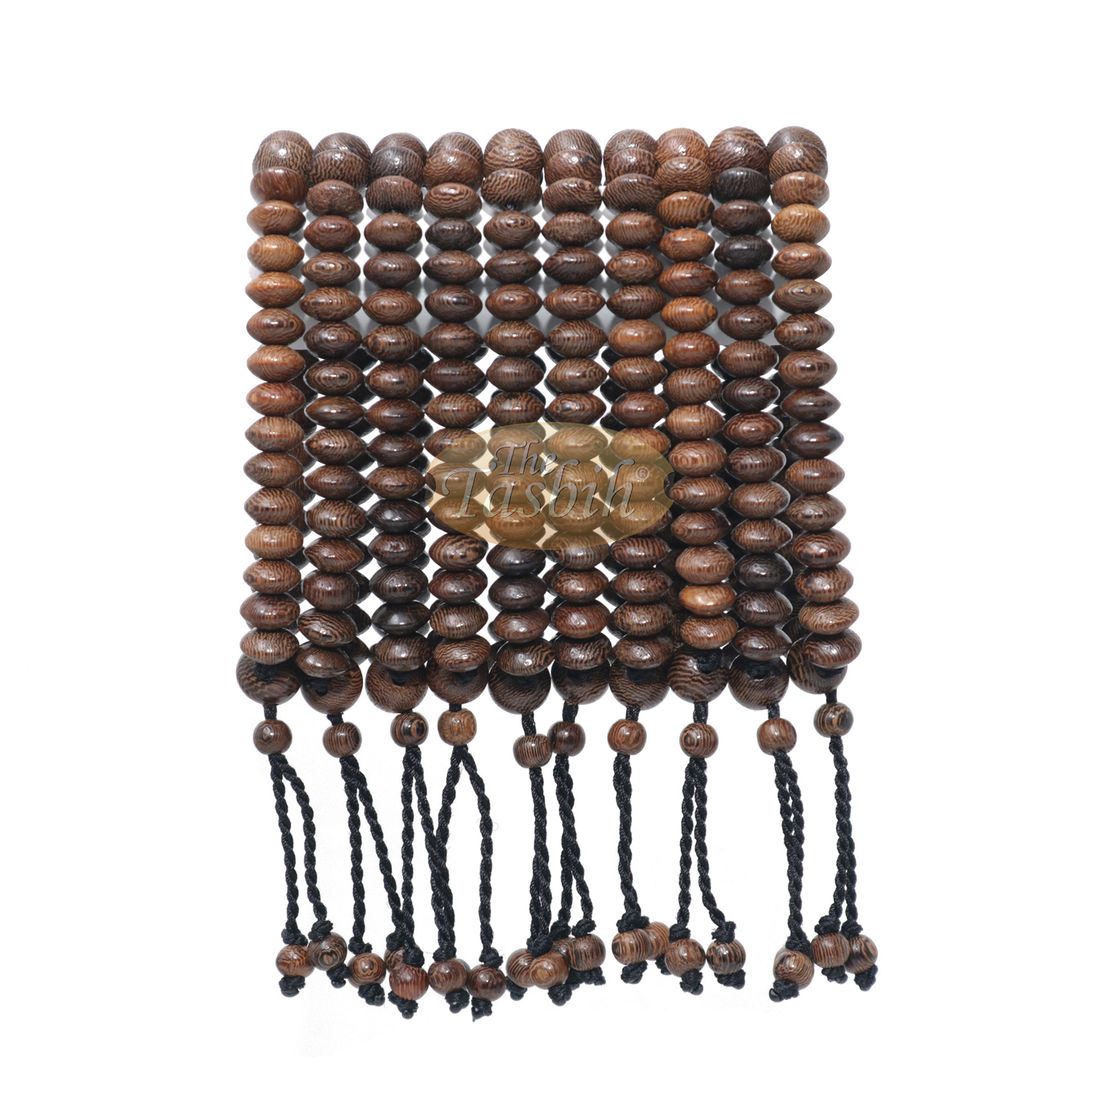 Johar Wood 33-bead Elastic String Saucer-shape 9x6mm Prayer Bead Bracelet